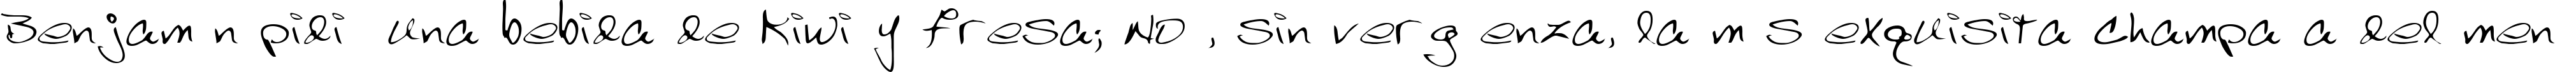 Пример написания шрифтом Scraw-Light текста на испанском